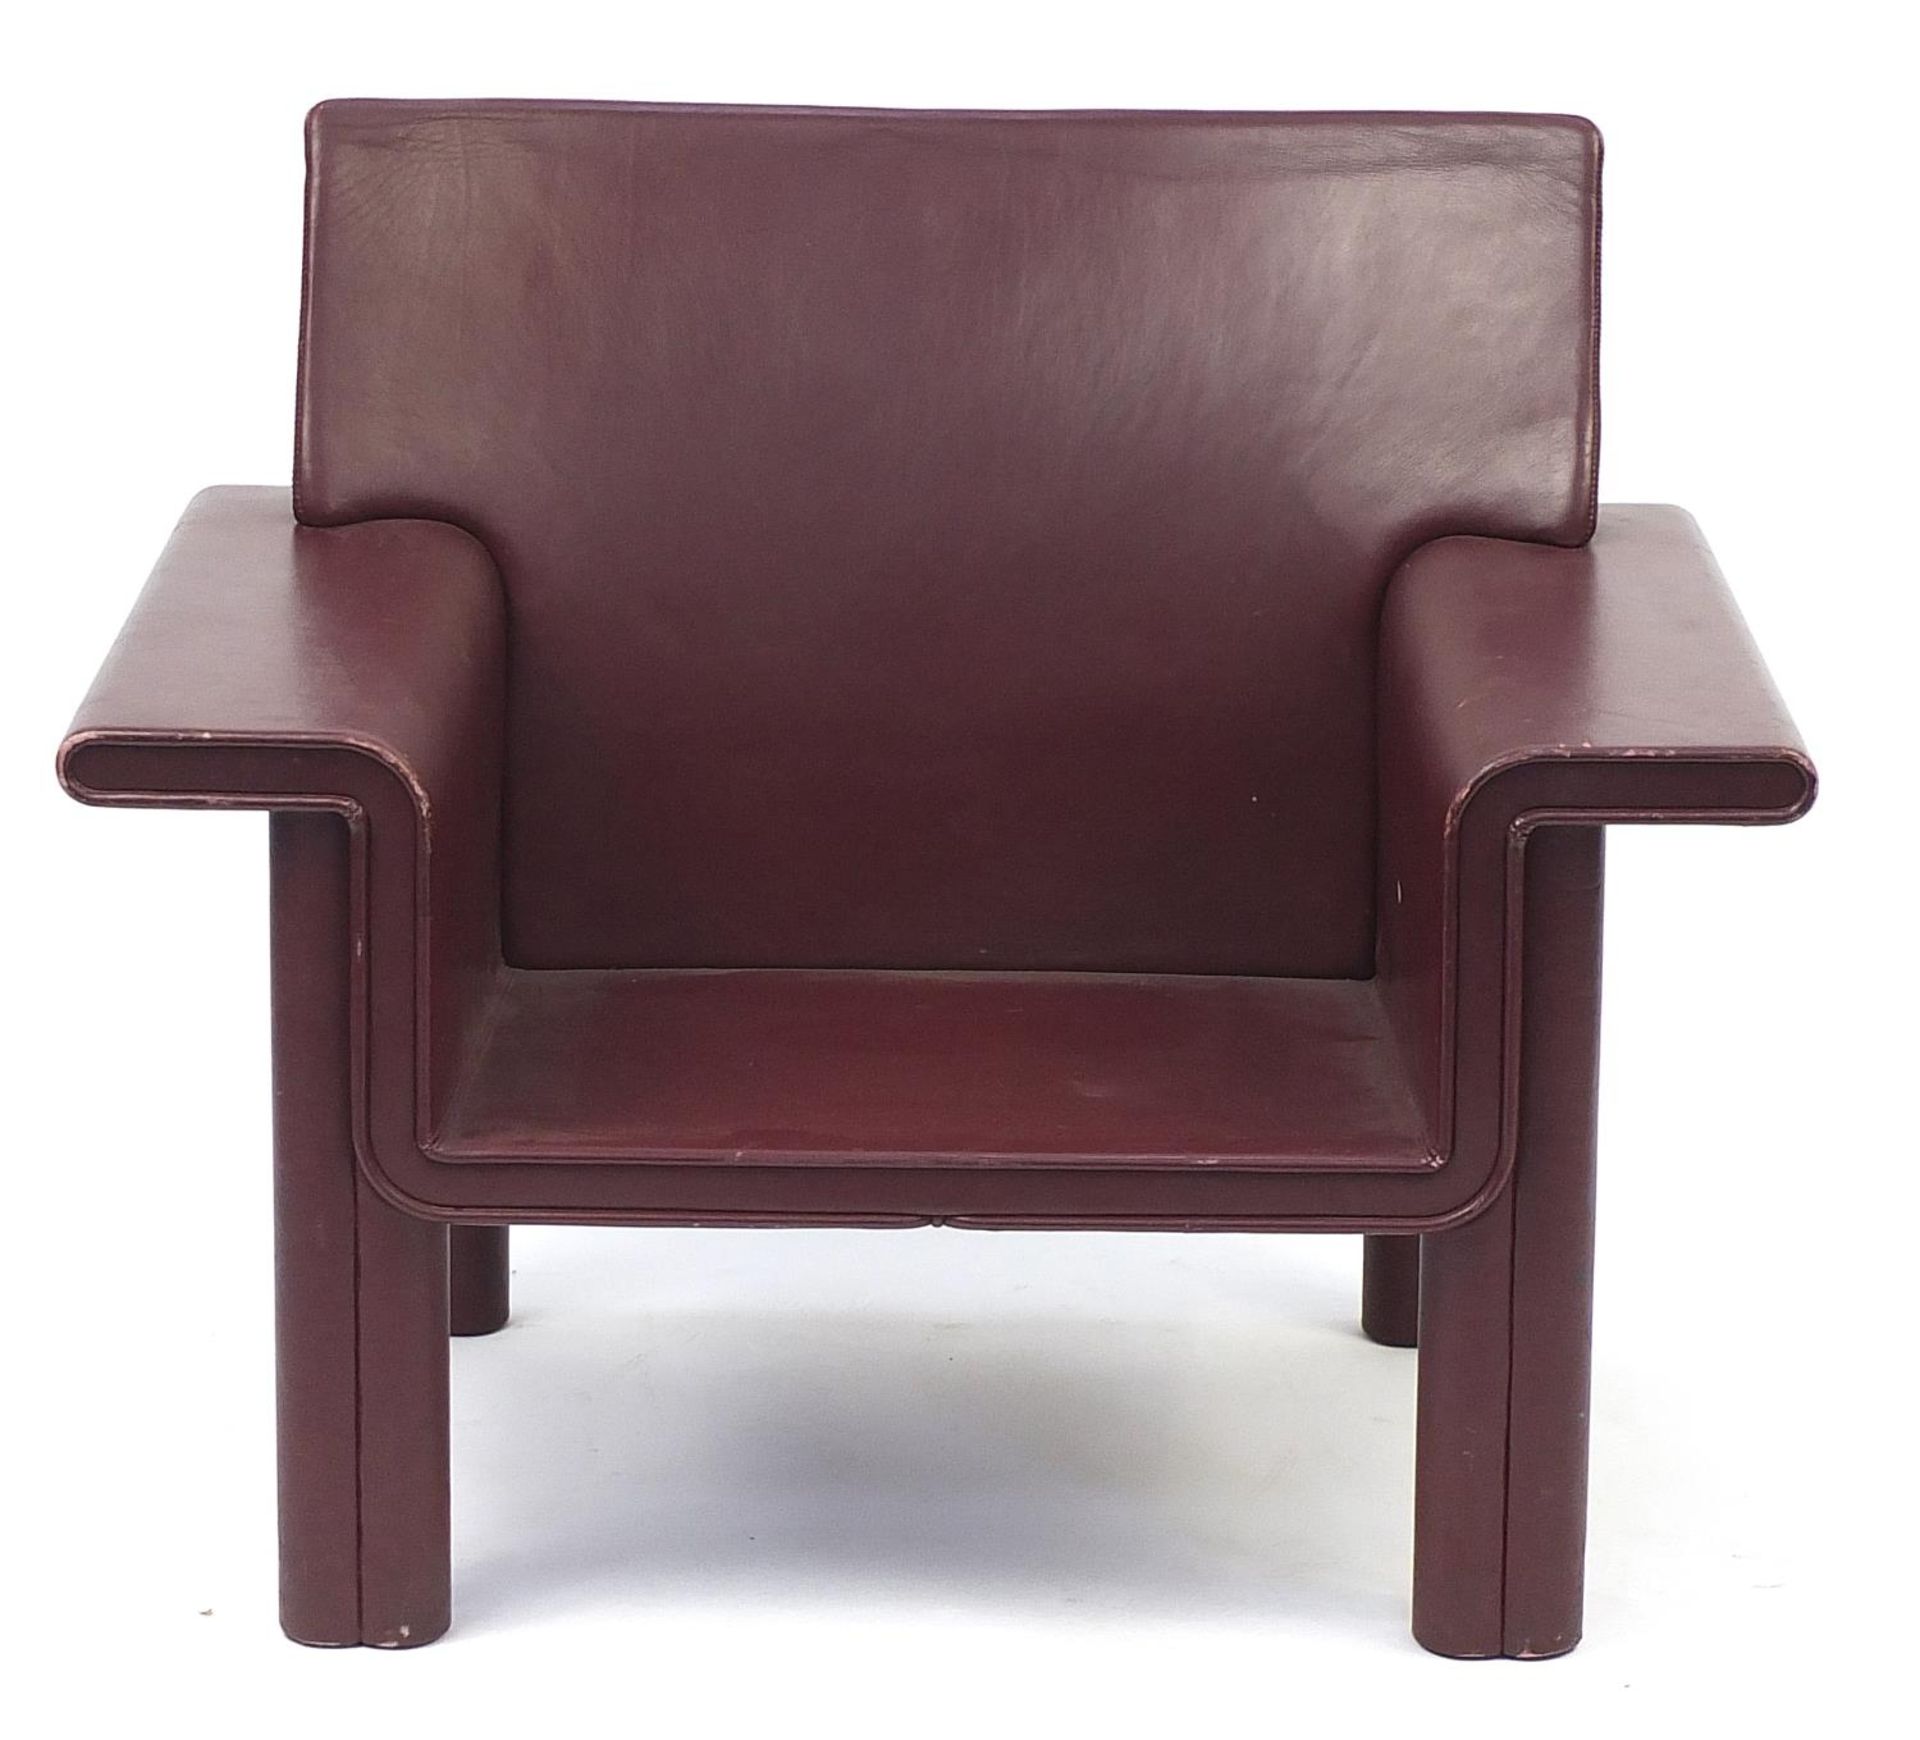 Afra and Tobia Scarpa for Meritalia, Italian burgundy leather Cornelia armchair, 77cm H x 95cm W x - Image 2 of 4